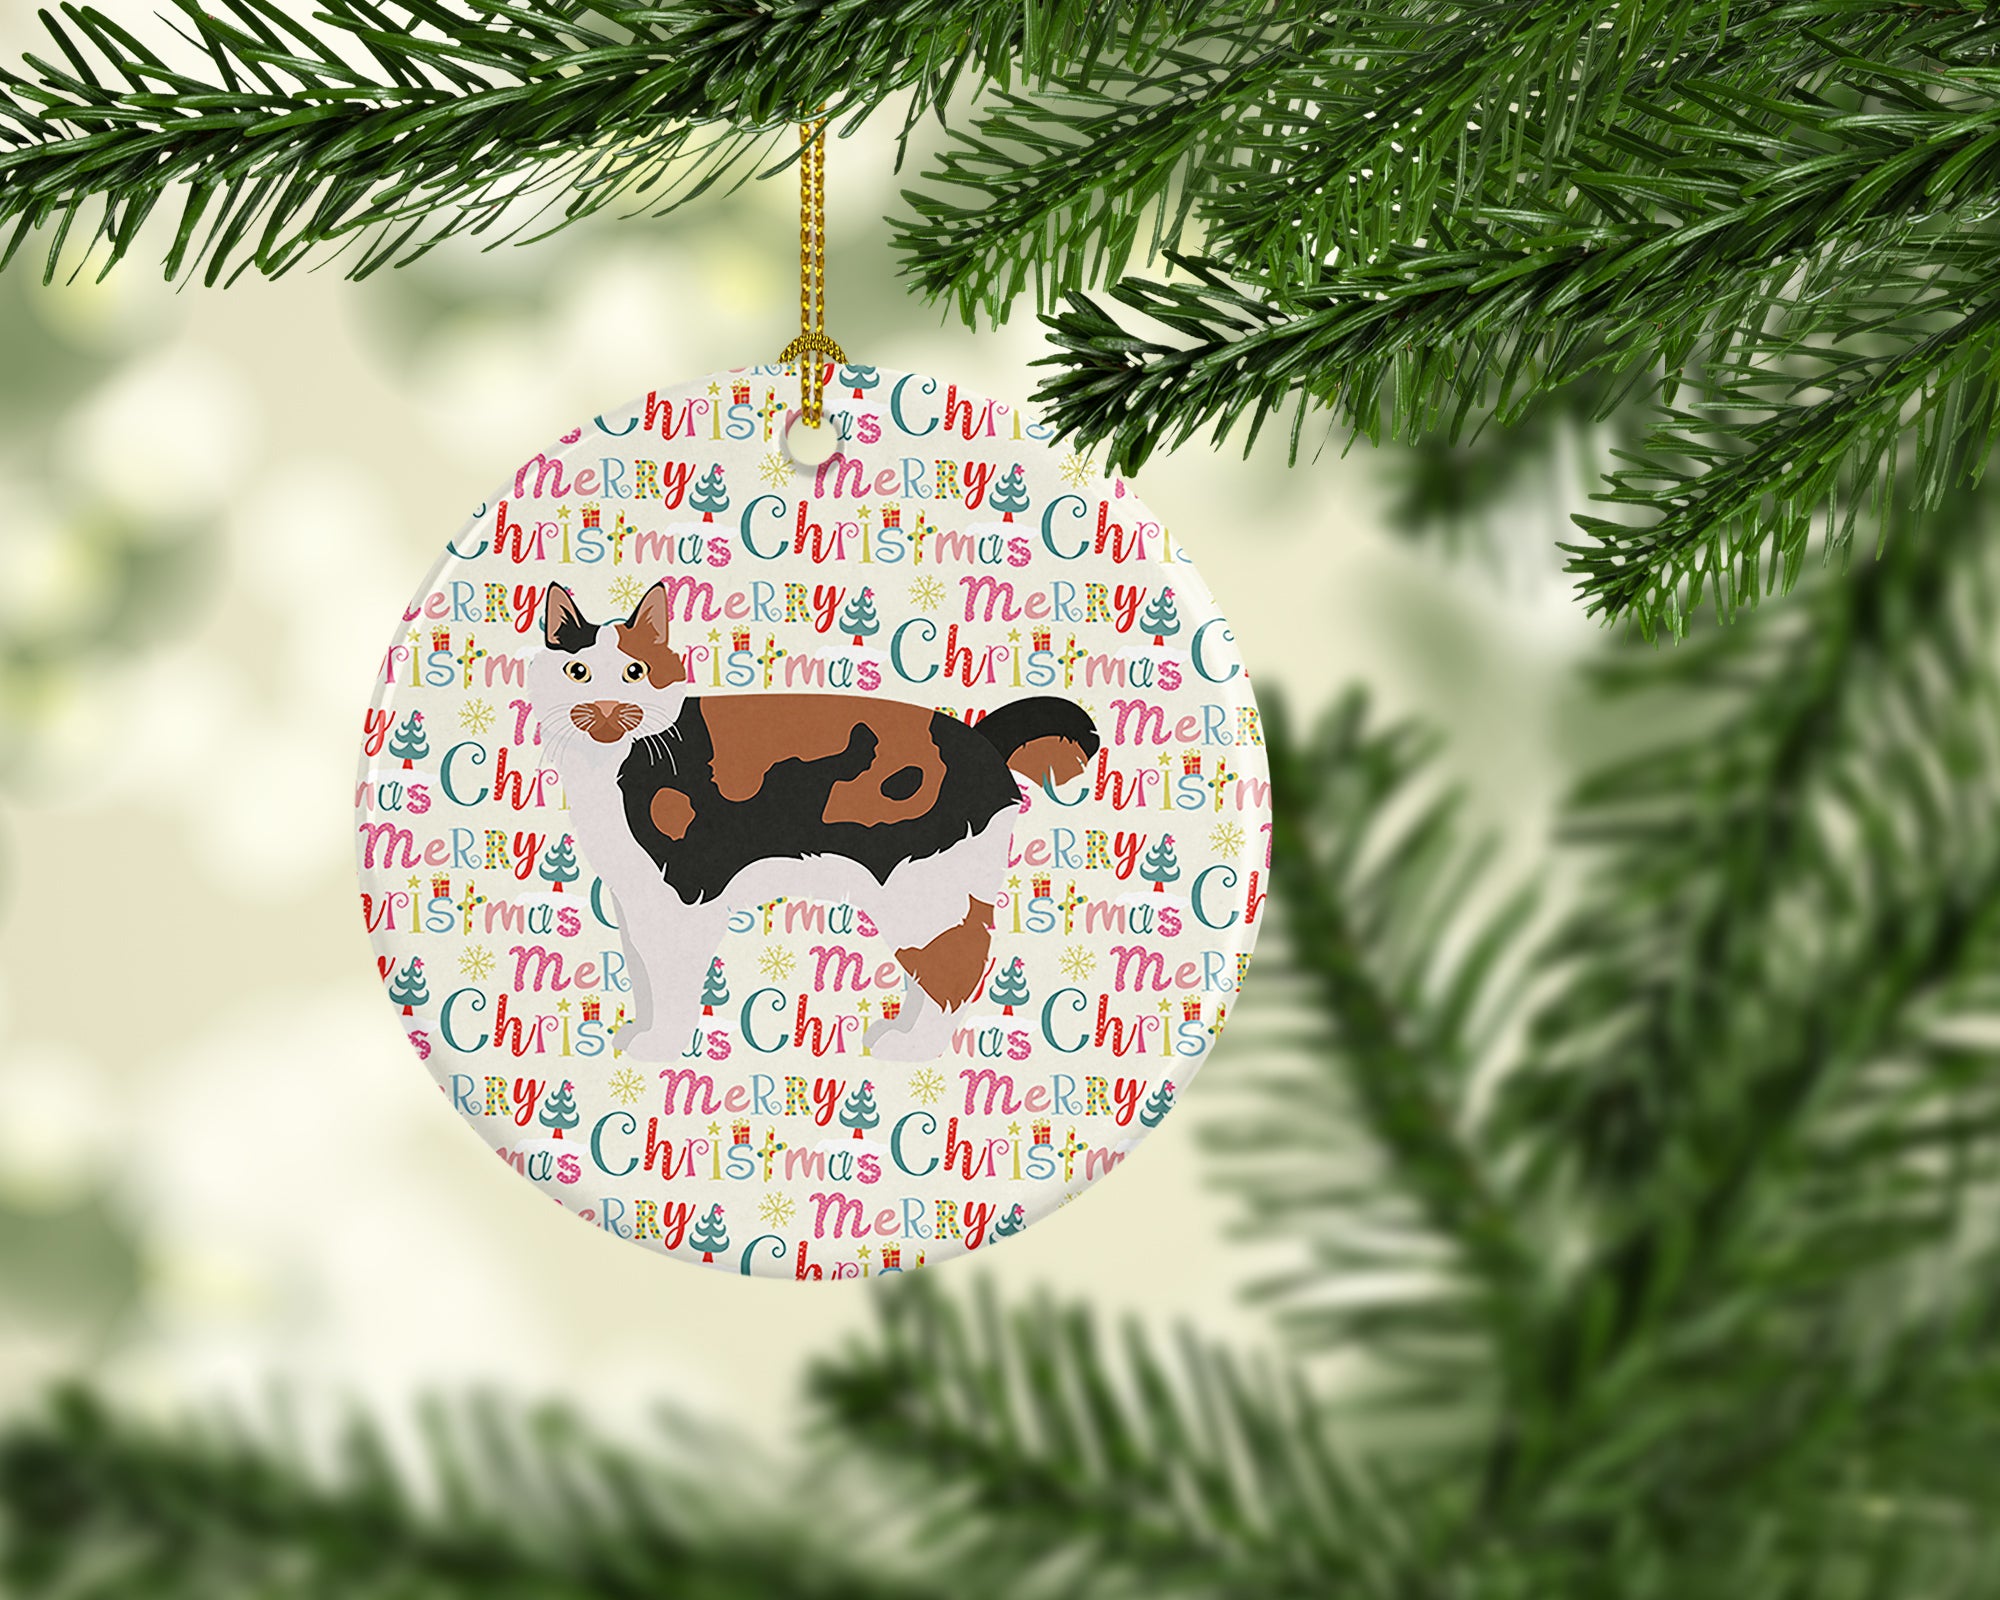 Buy this Cymric #2 Cat Christmas Ceramic Ornament